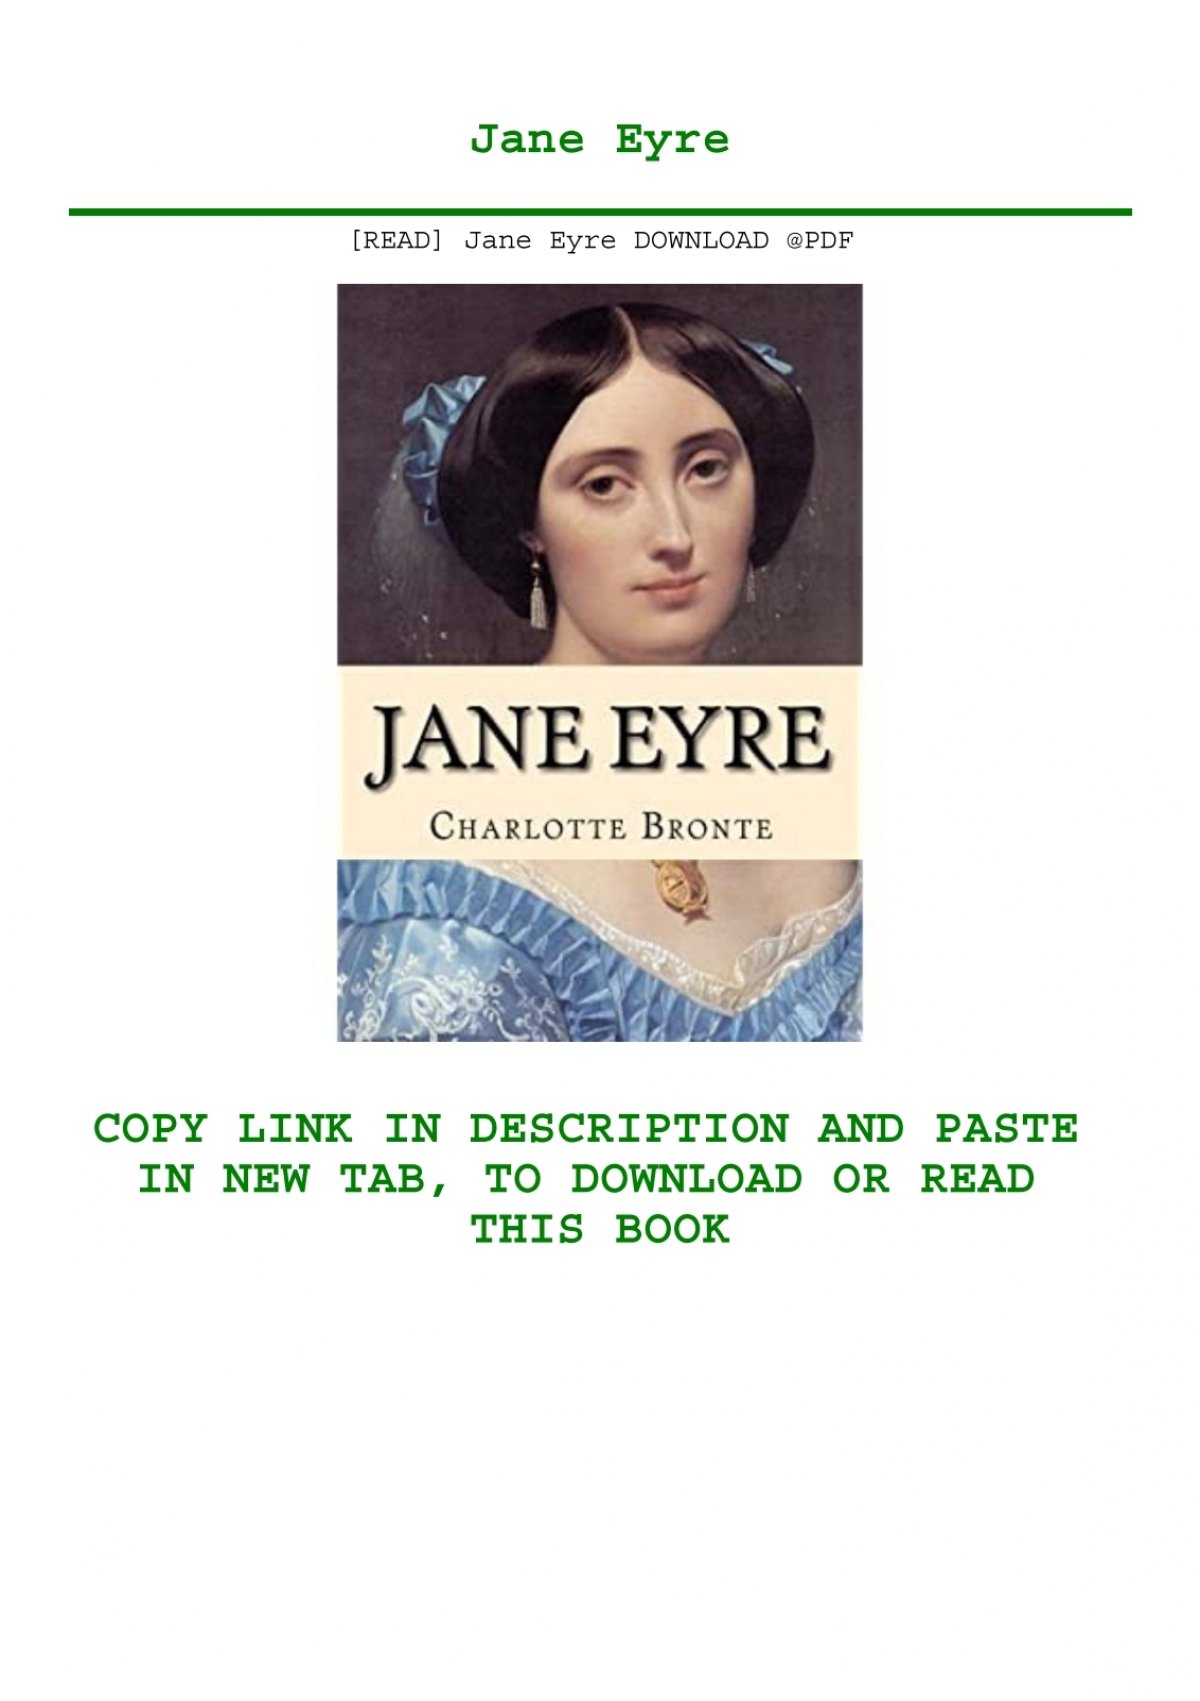 [READ] Jane Eyre DOWNLOAD @PDF